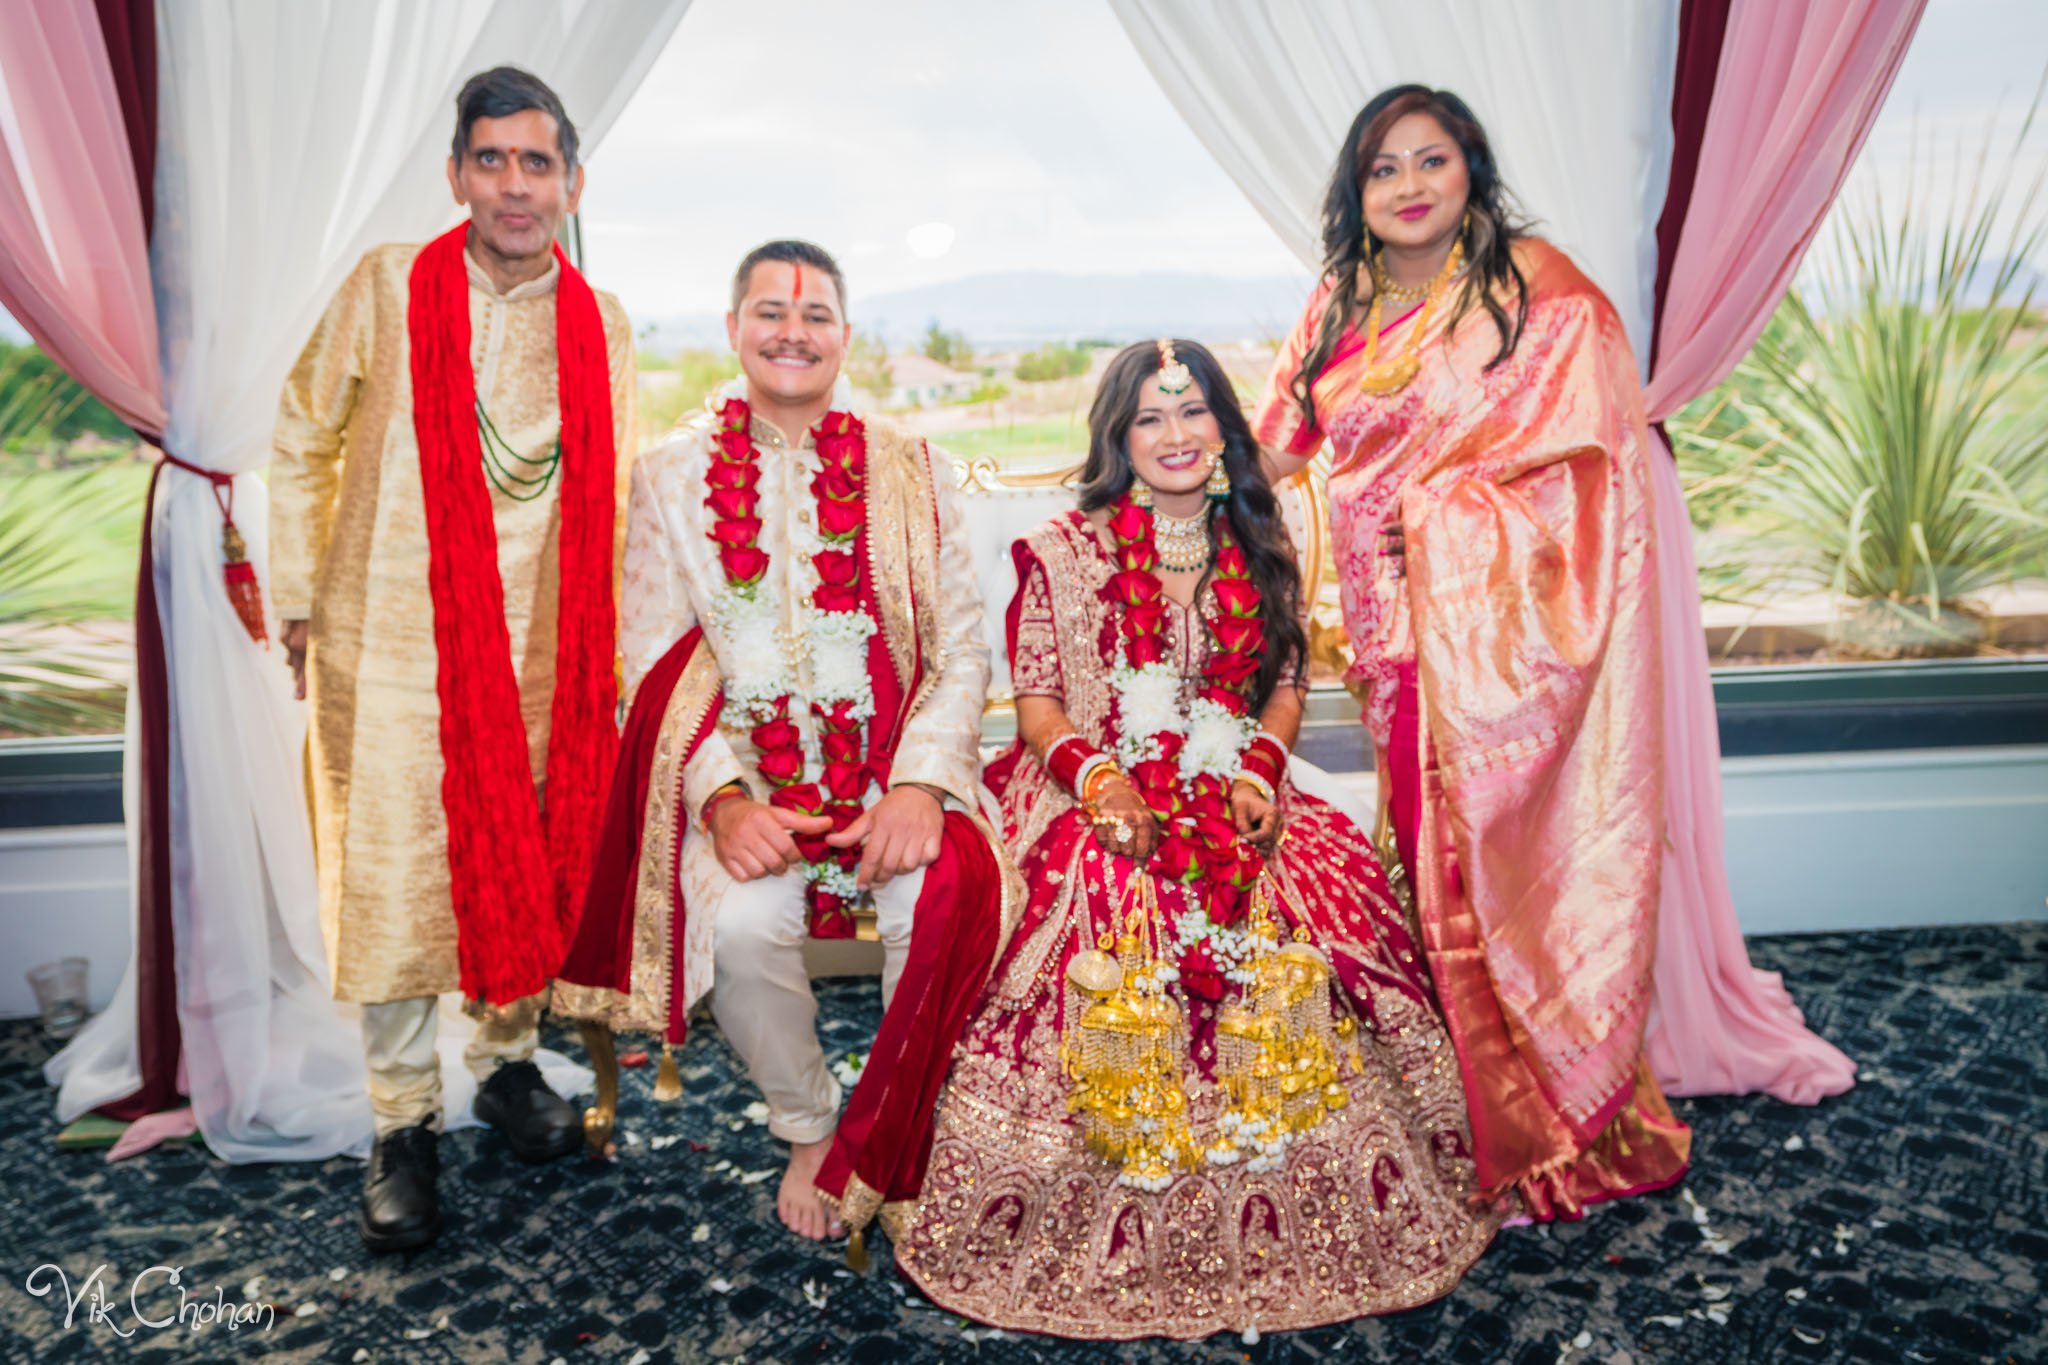 2022-06-09-Annie-&-Steven-Las-Vegas-Indian-Wedding-Ceremony-Photography-Vik-Chohan-Photography-Photo-Booth-Social-Media-VCP-197.jpg